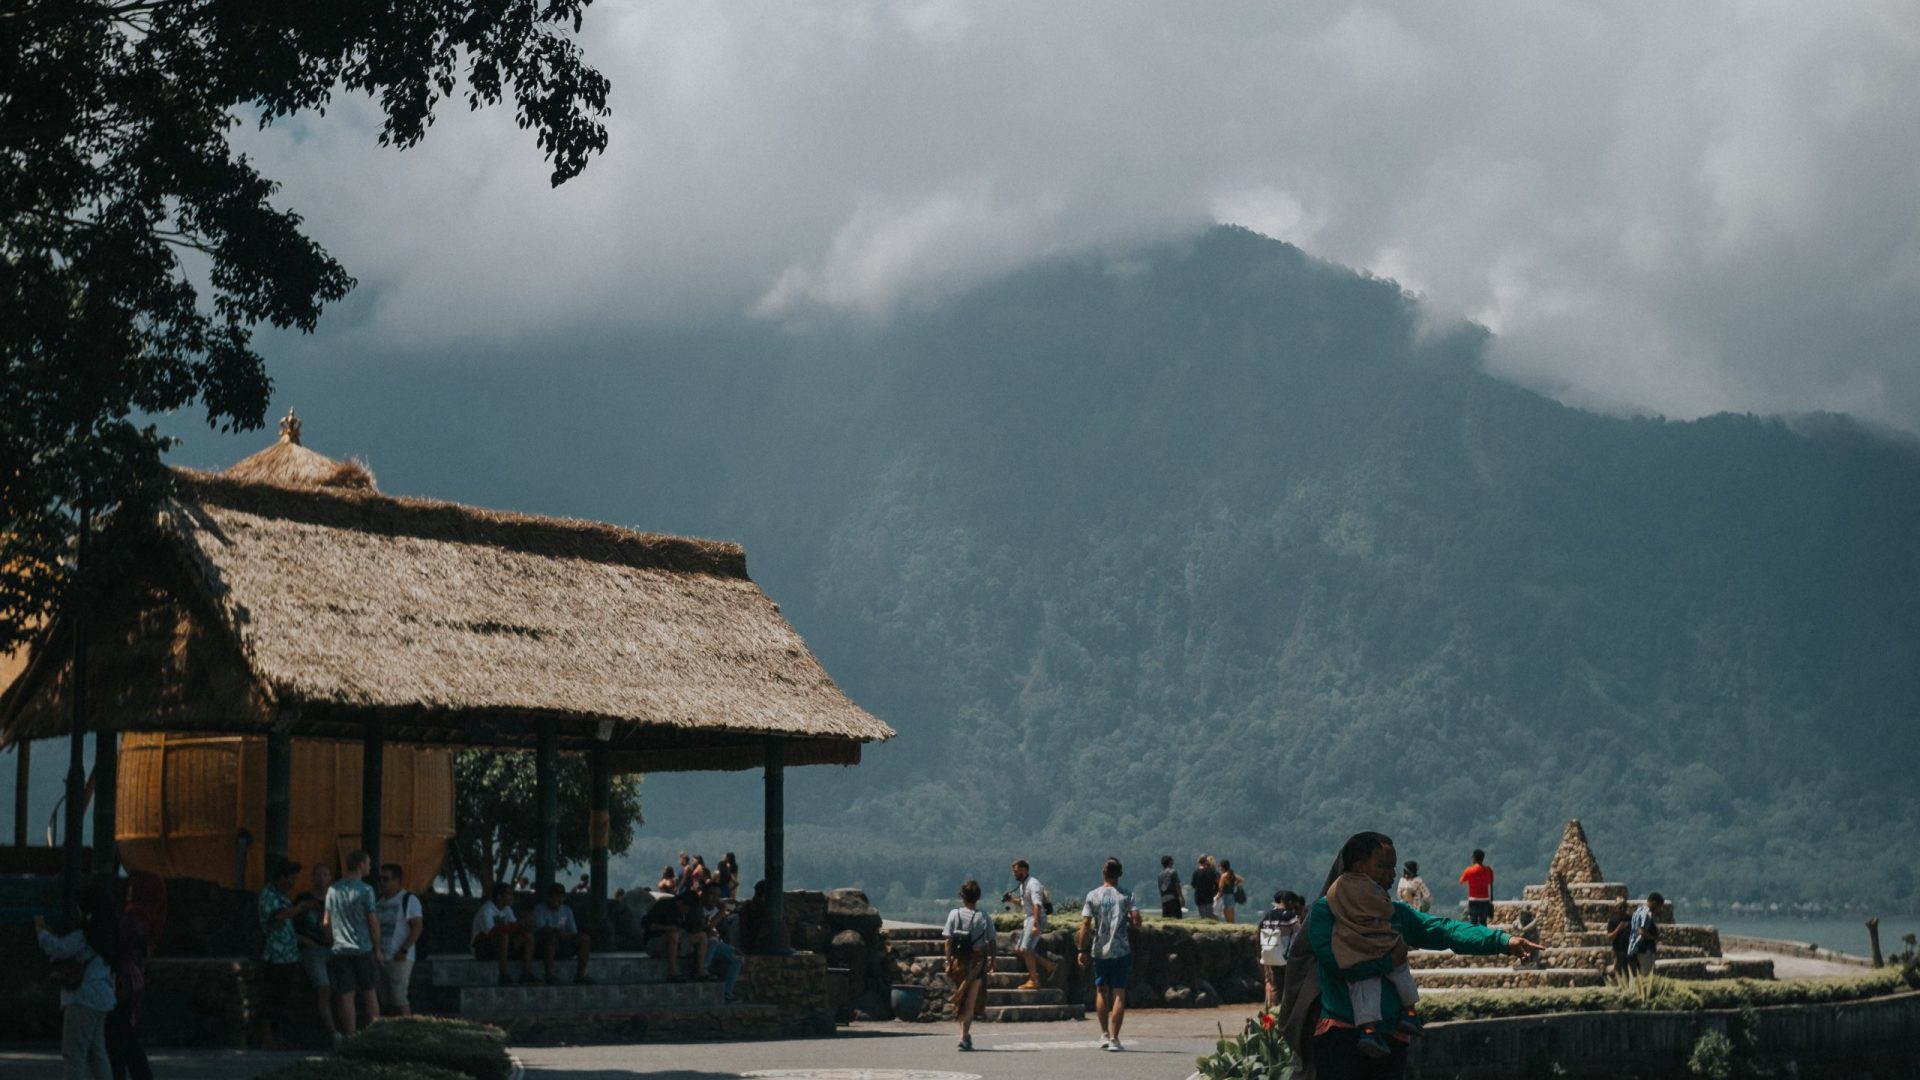 Bali has banned trekking and mountain climbing because of lewd tourist behavior